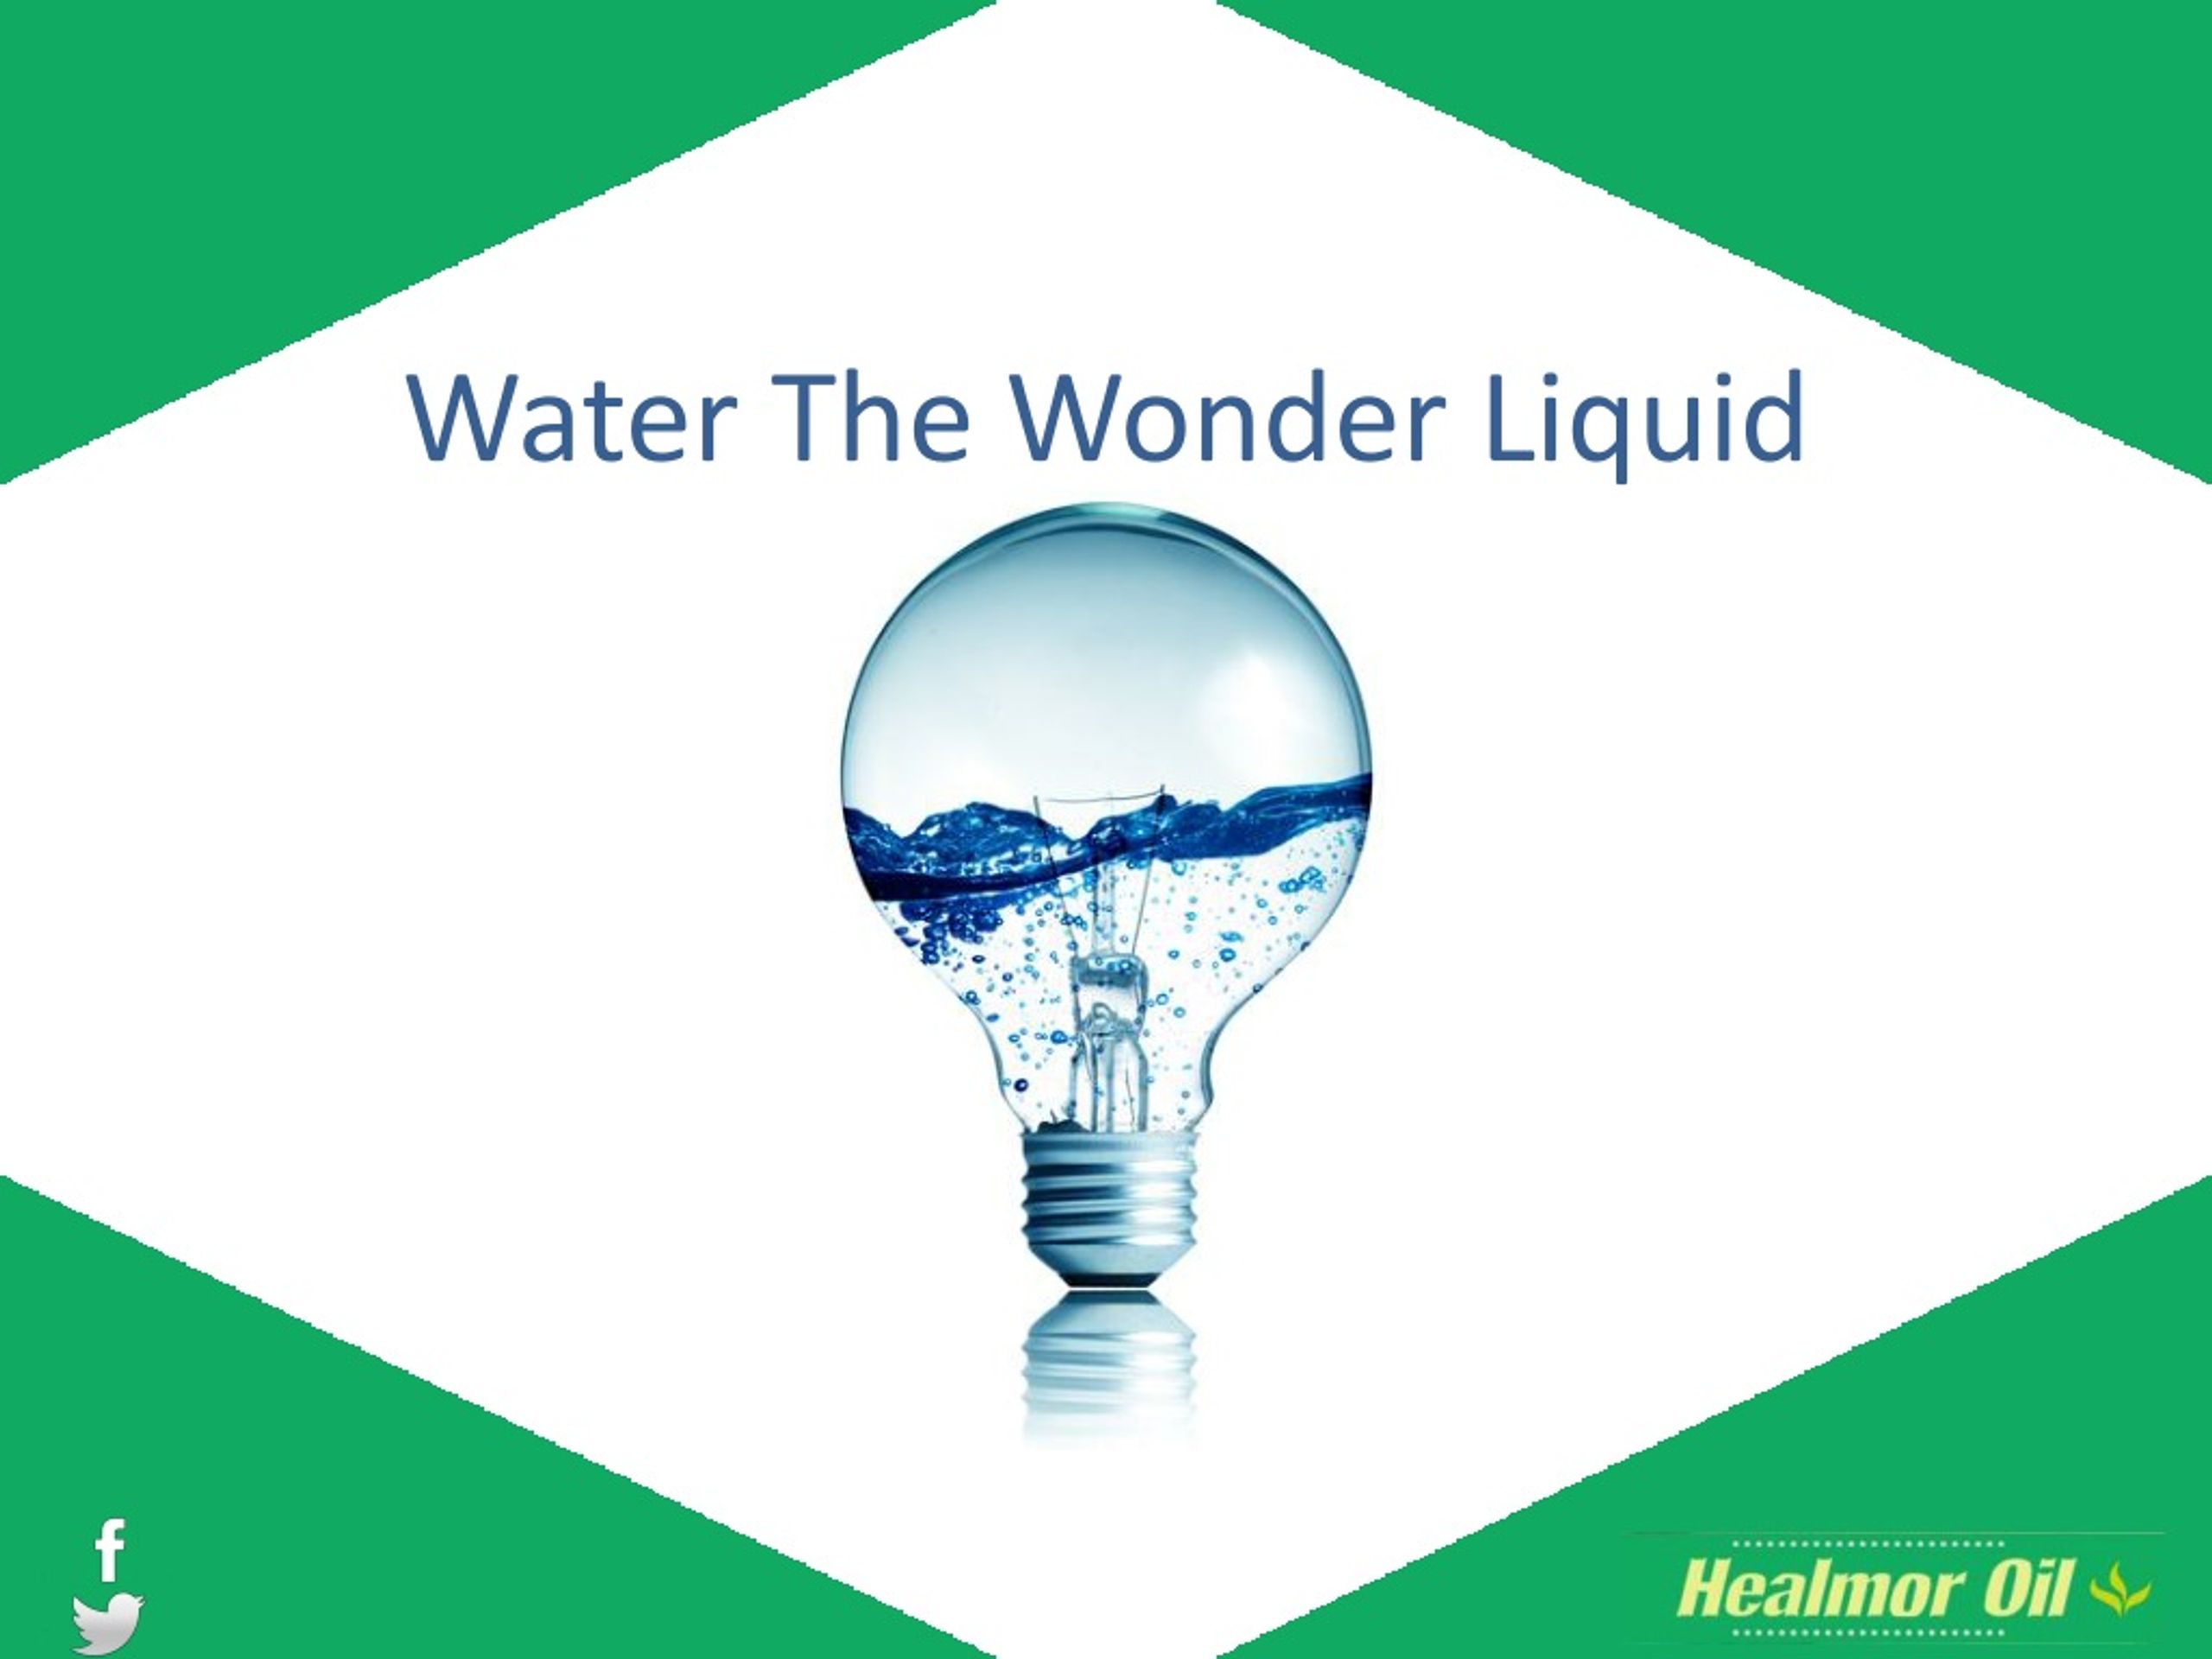 essay on water a wonder liquid